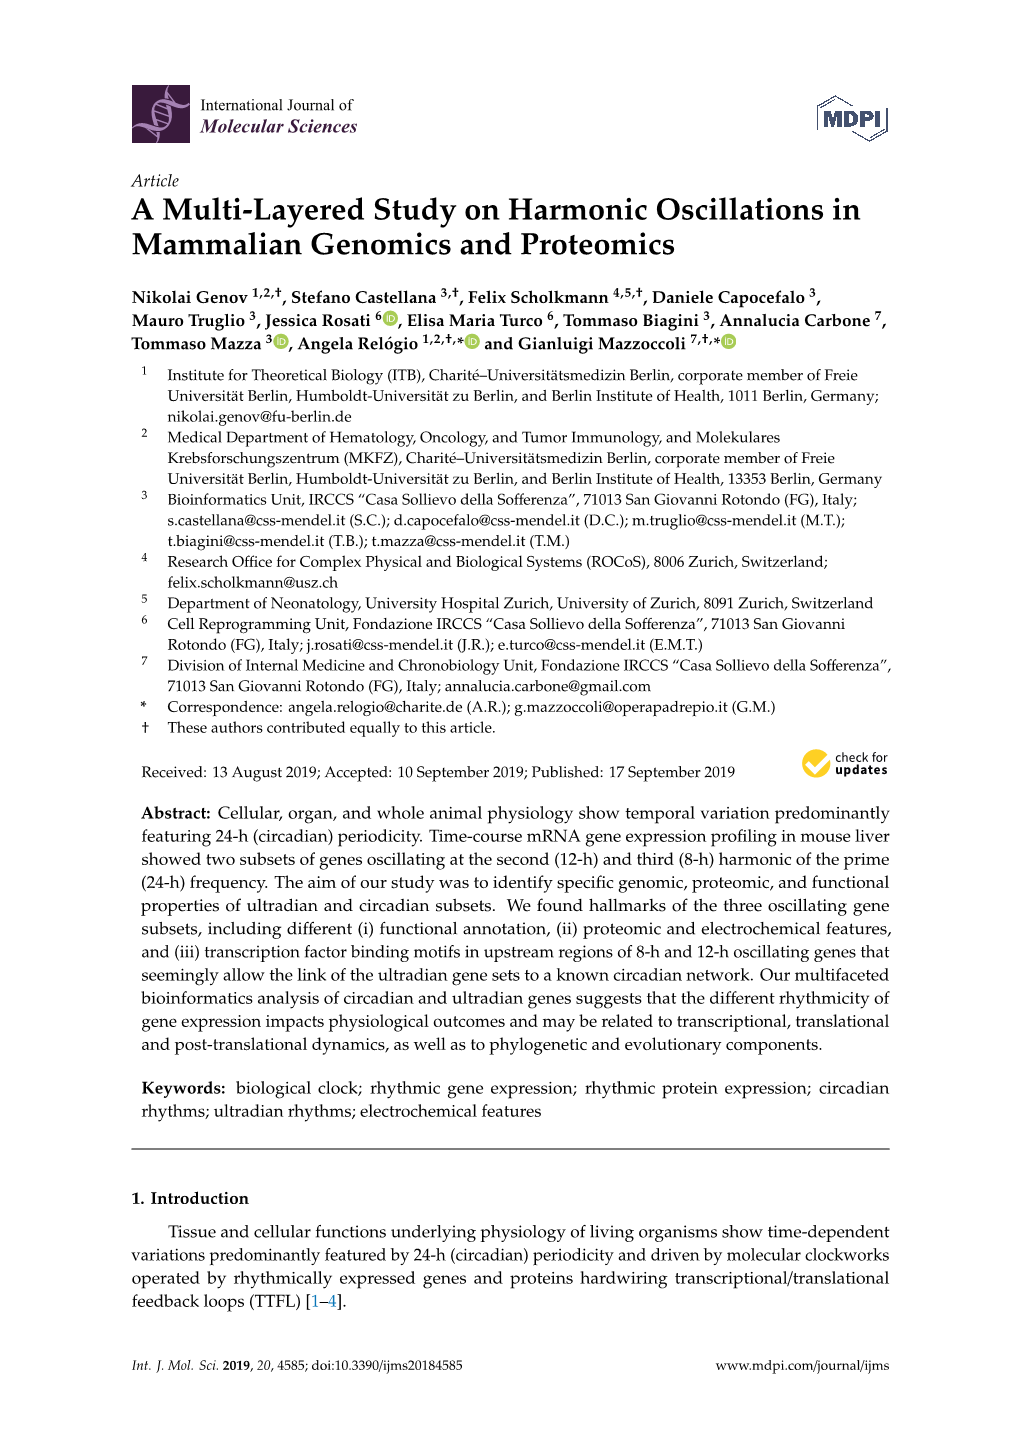 A Multi-Layered Study on Harmonic Oscillations in Mammalian Genomics and Proteomics